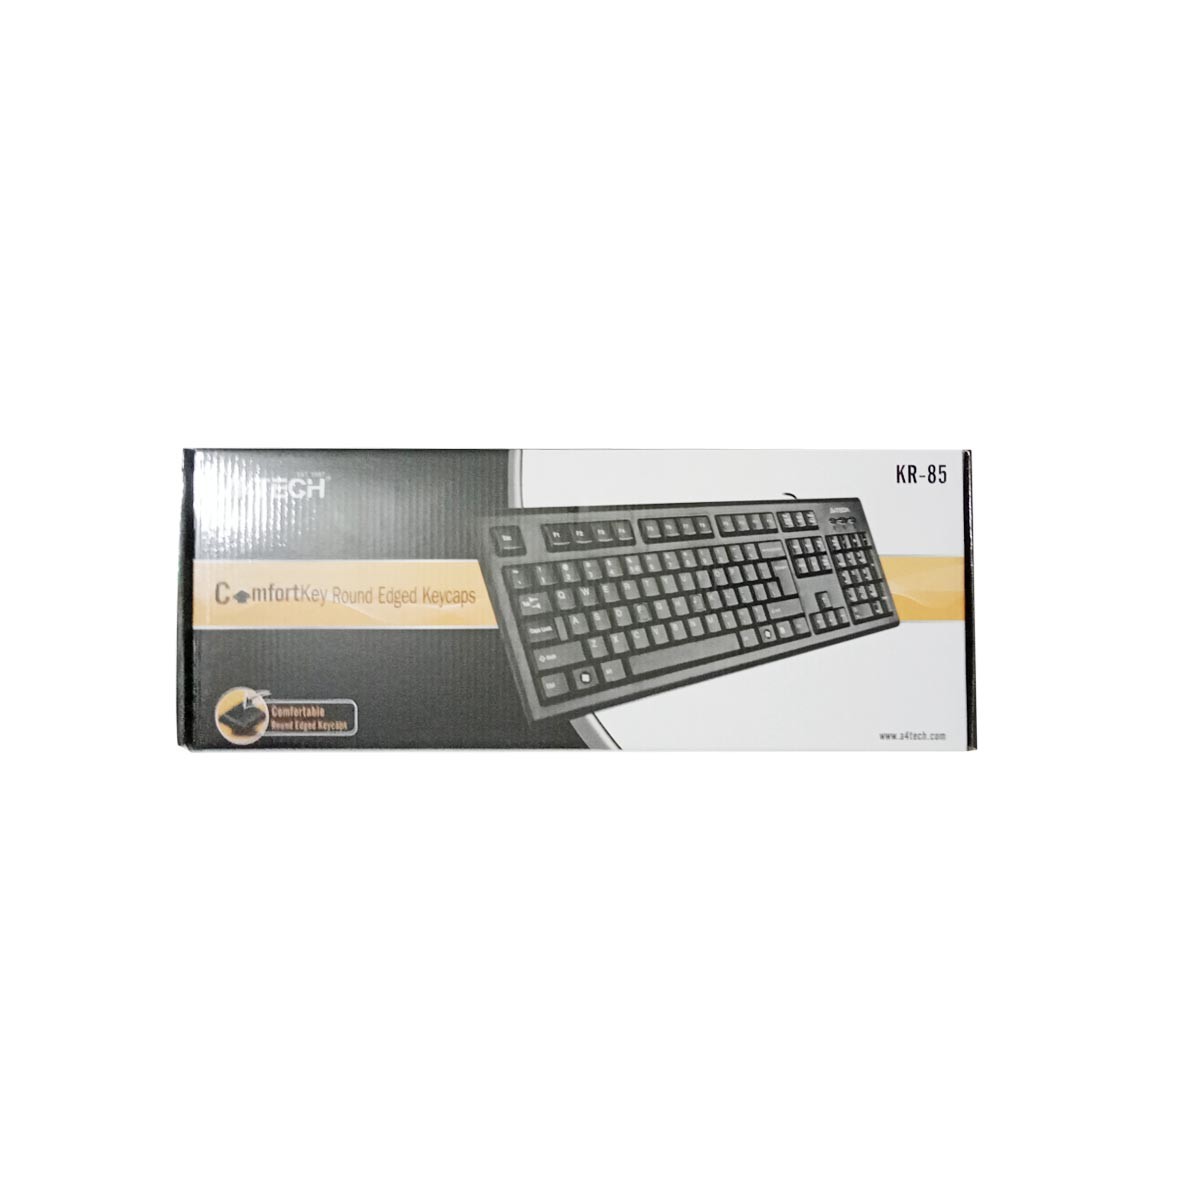 A4TECH KR-85 Comfort Round-edge Keyboard ৳ 500.00